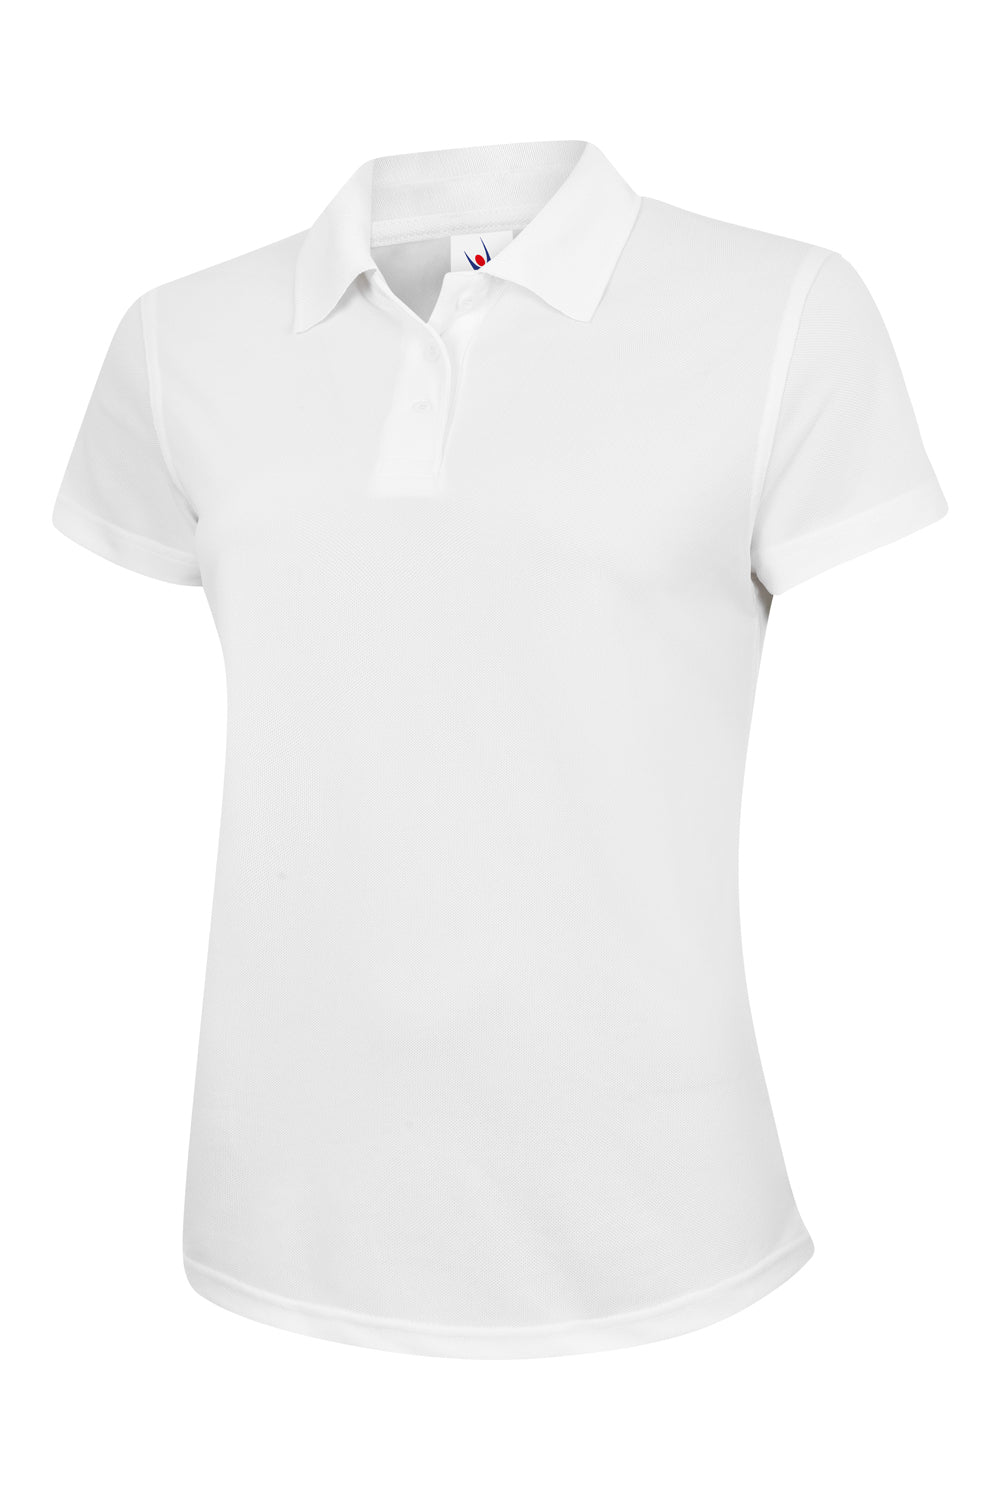 ladies_super_cool_workwear_polo_shirt_white